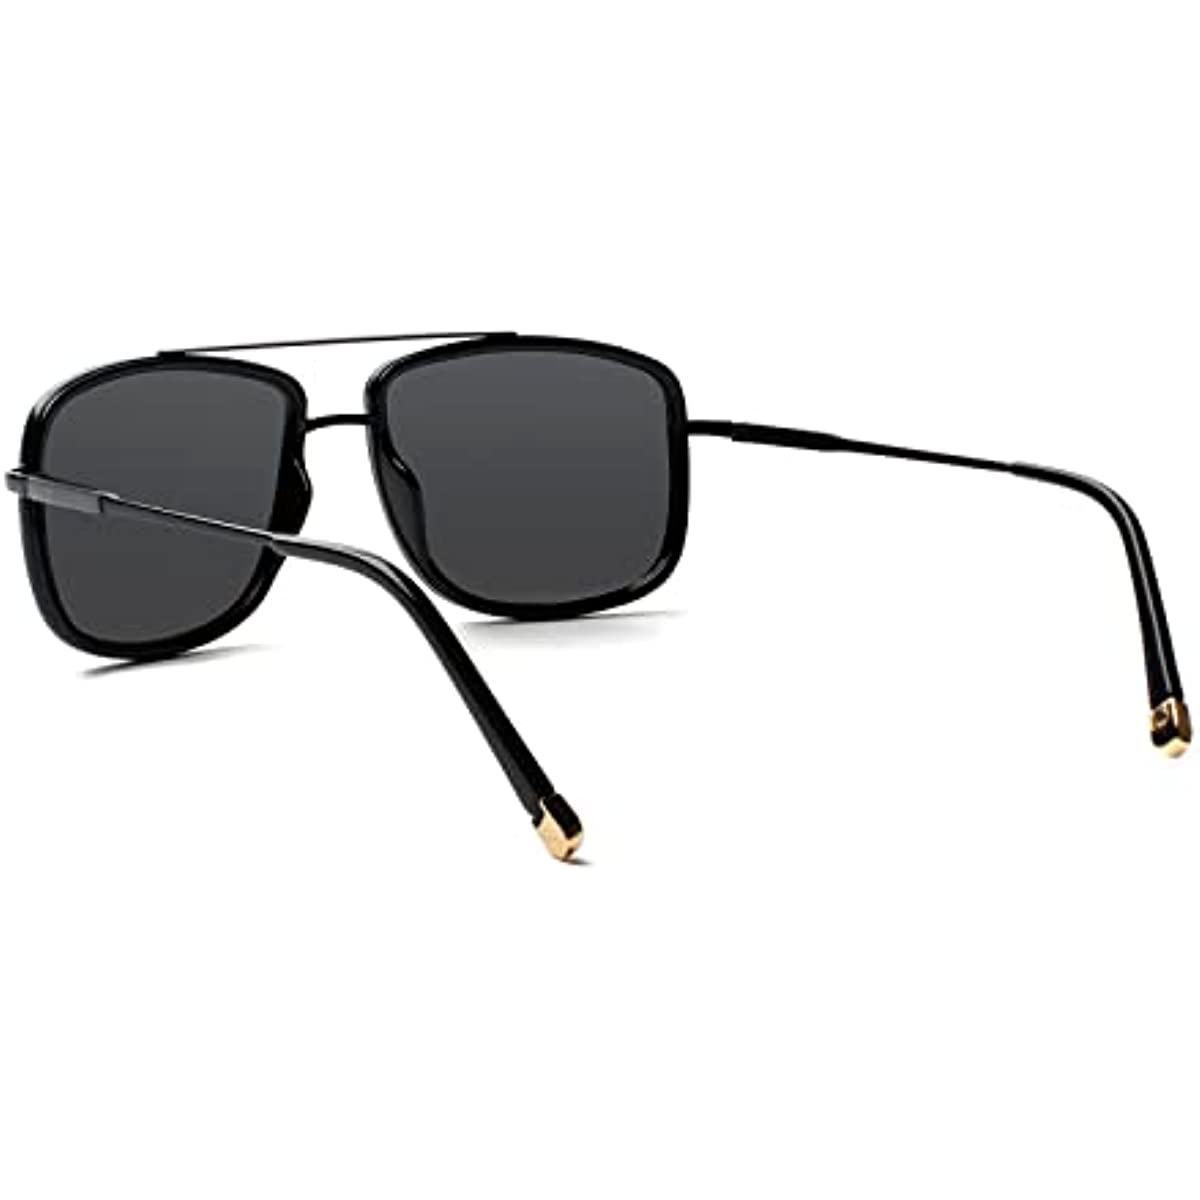 SUNVOES Square Aviator Polarized Sunglasses for Men and Women UV400 Protection Sunglasses Metal Sun Glasses